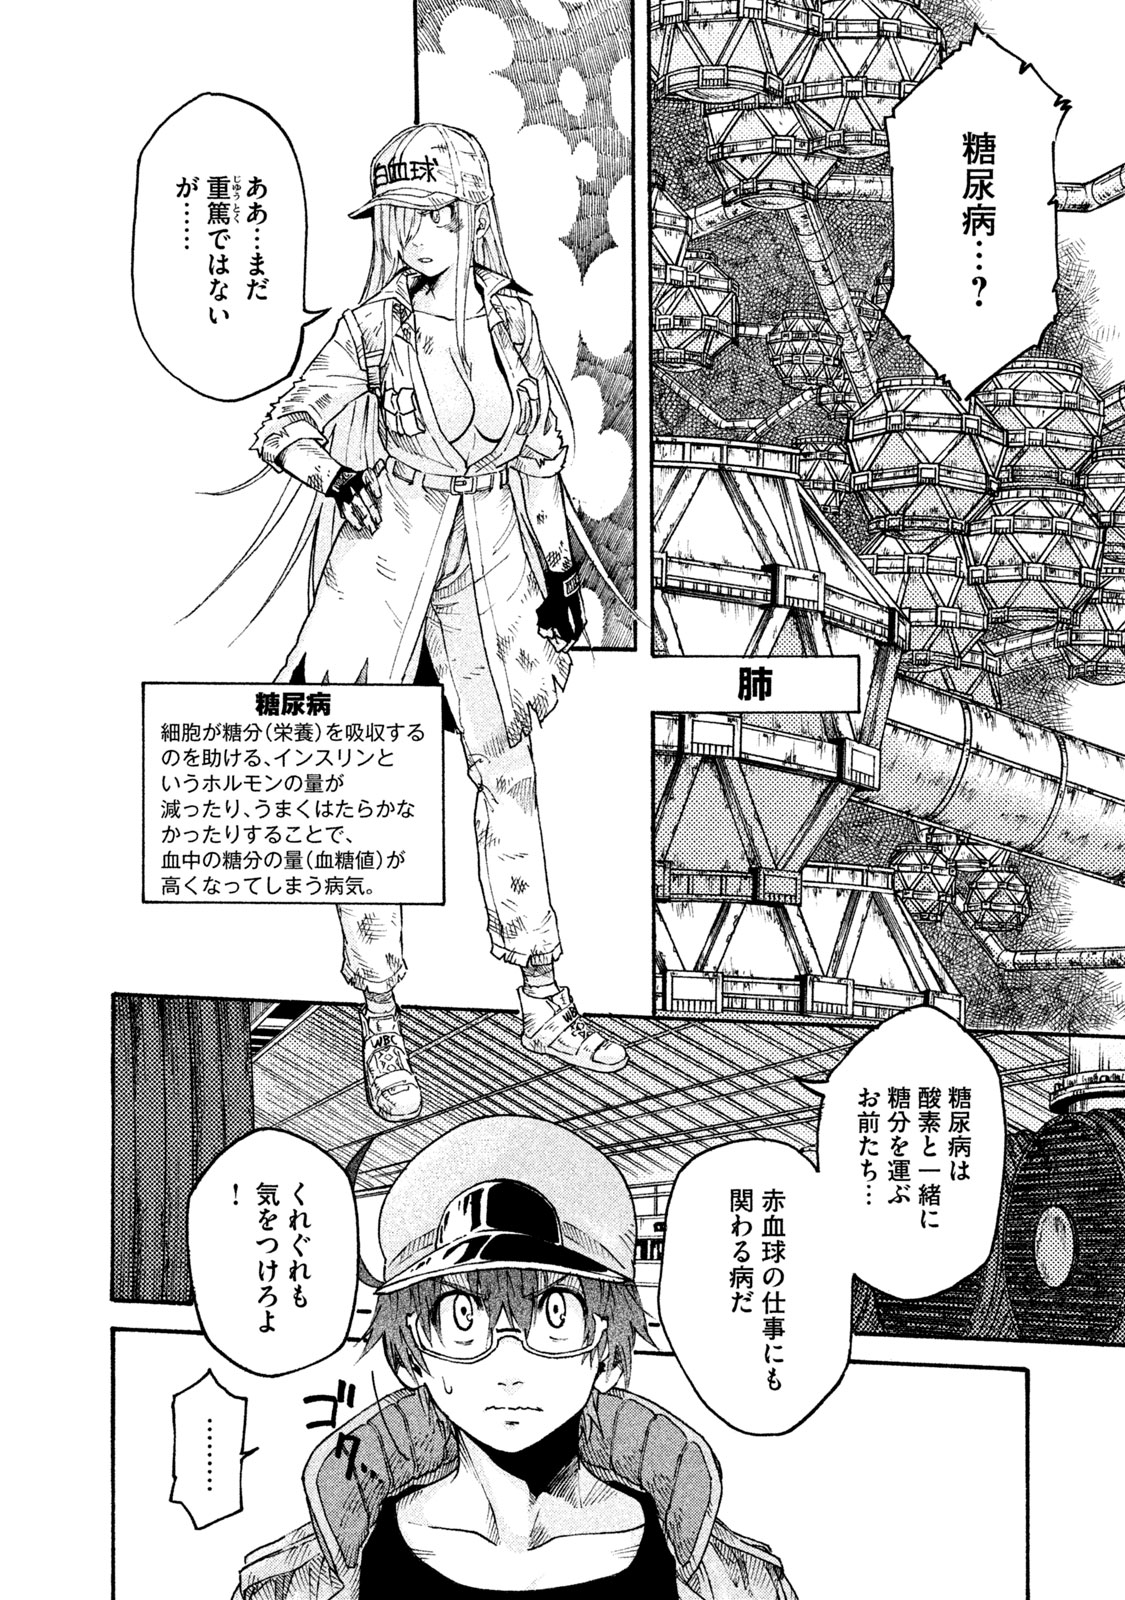 Hataraku Saibou BLACK - Chapter 18 - Page 8